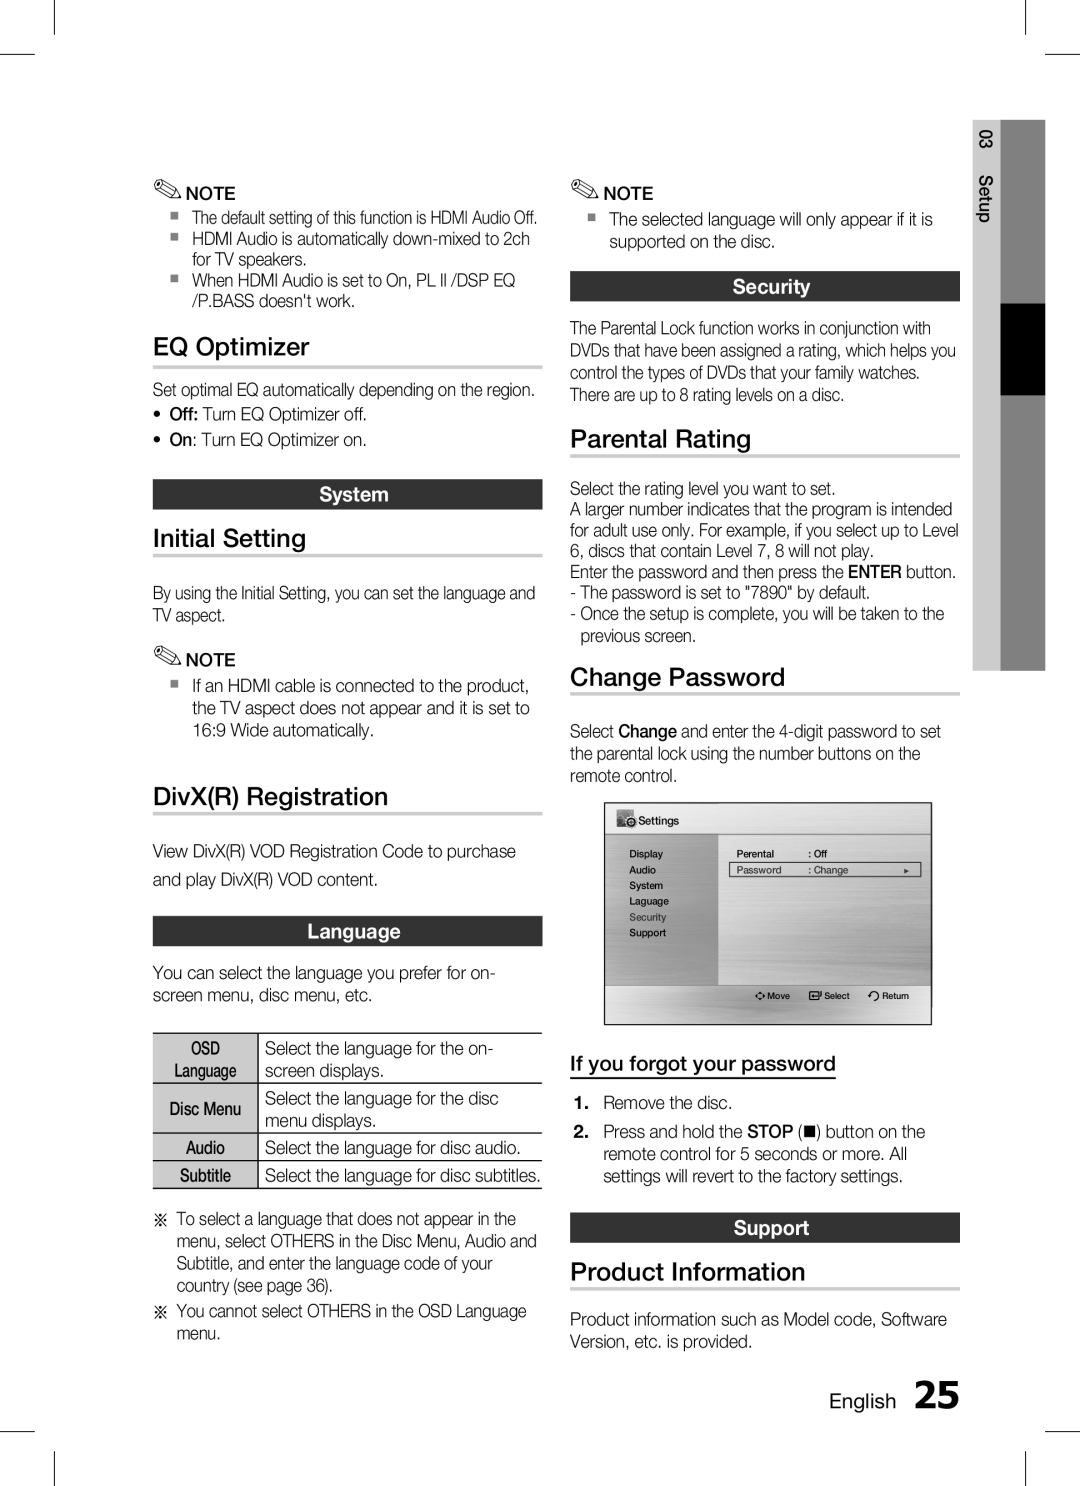 Samsung HT-C350 EQ Optimizer, Initial Setting, DivXR Registration, Parental Rating, Change Password, Product Information 